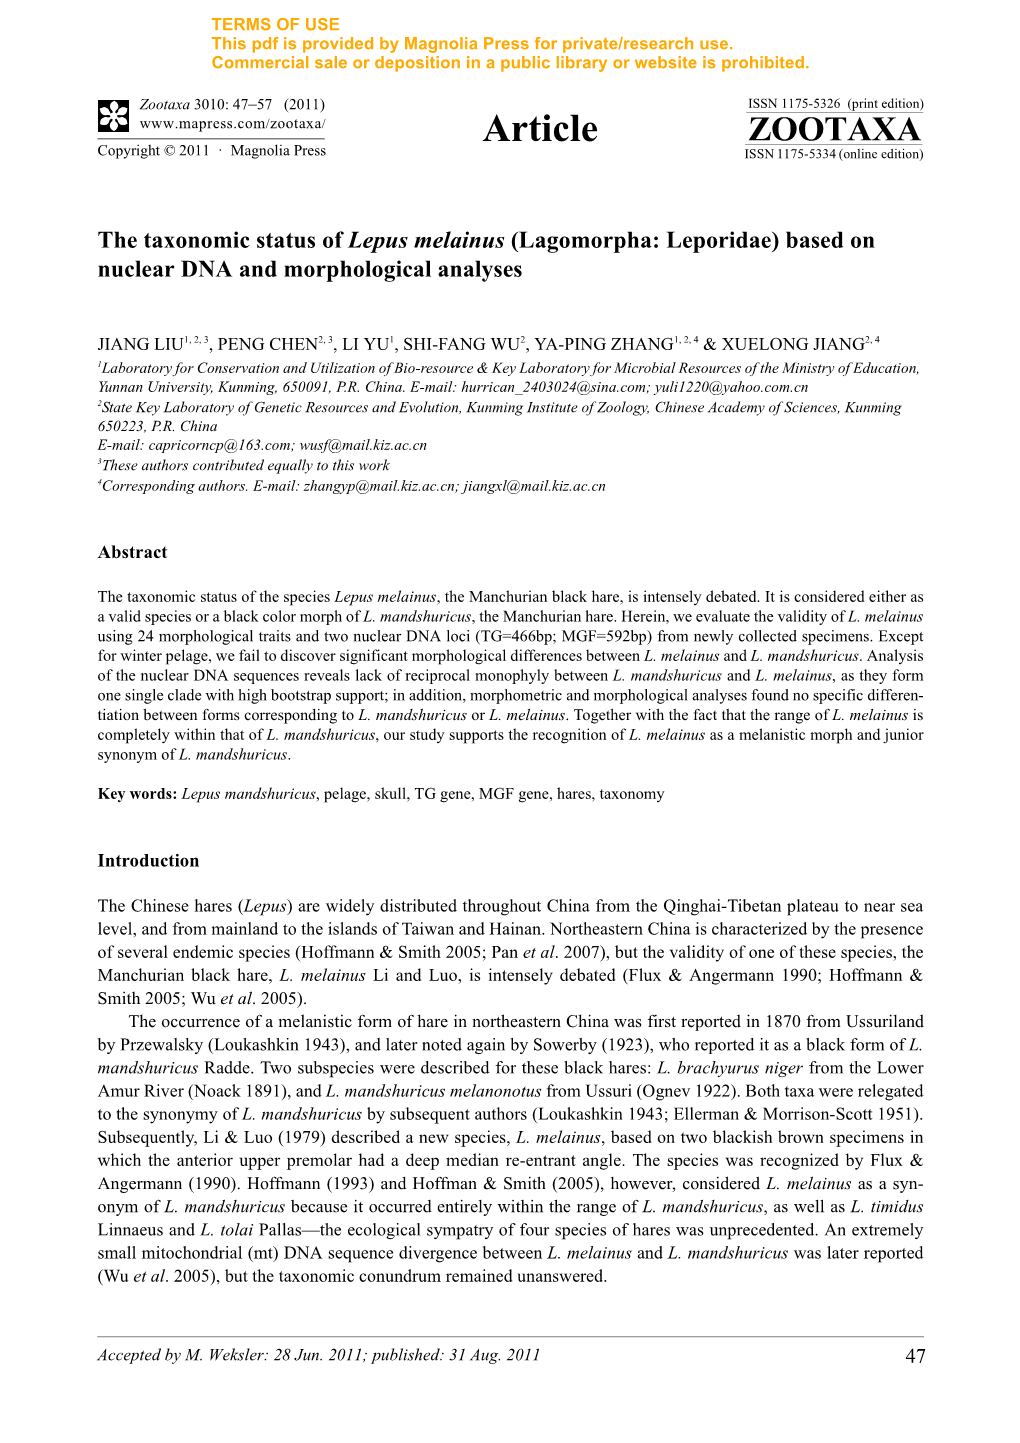 The Taxonomic Status of Lepus Melainus (Lagomorpha: Leporidae) Based on Nuclear DNA and Morphological Analyses